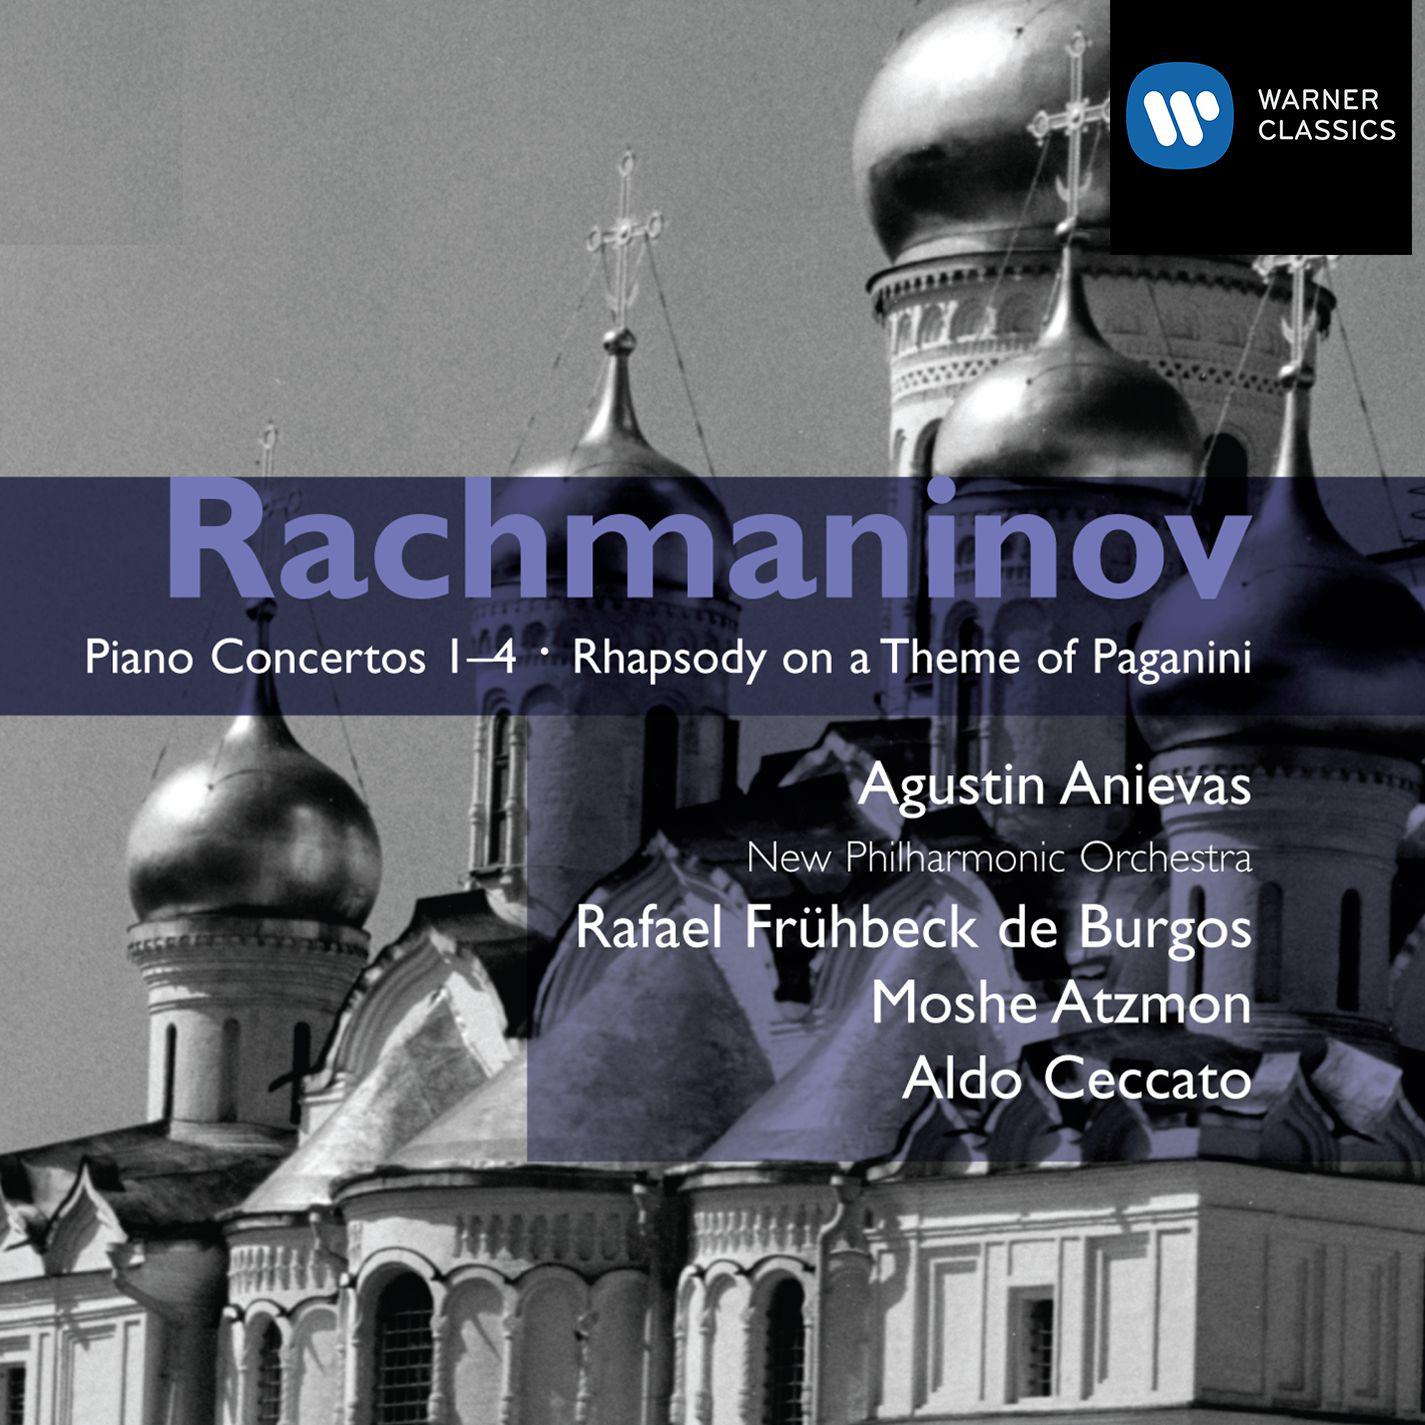 Rhapsody on a Theme of Paganini, Op. 43:Variation VII. Meno mosso, a tempo moderato